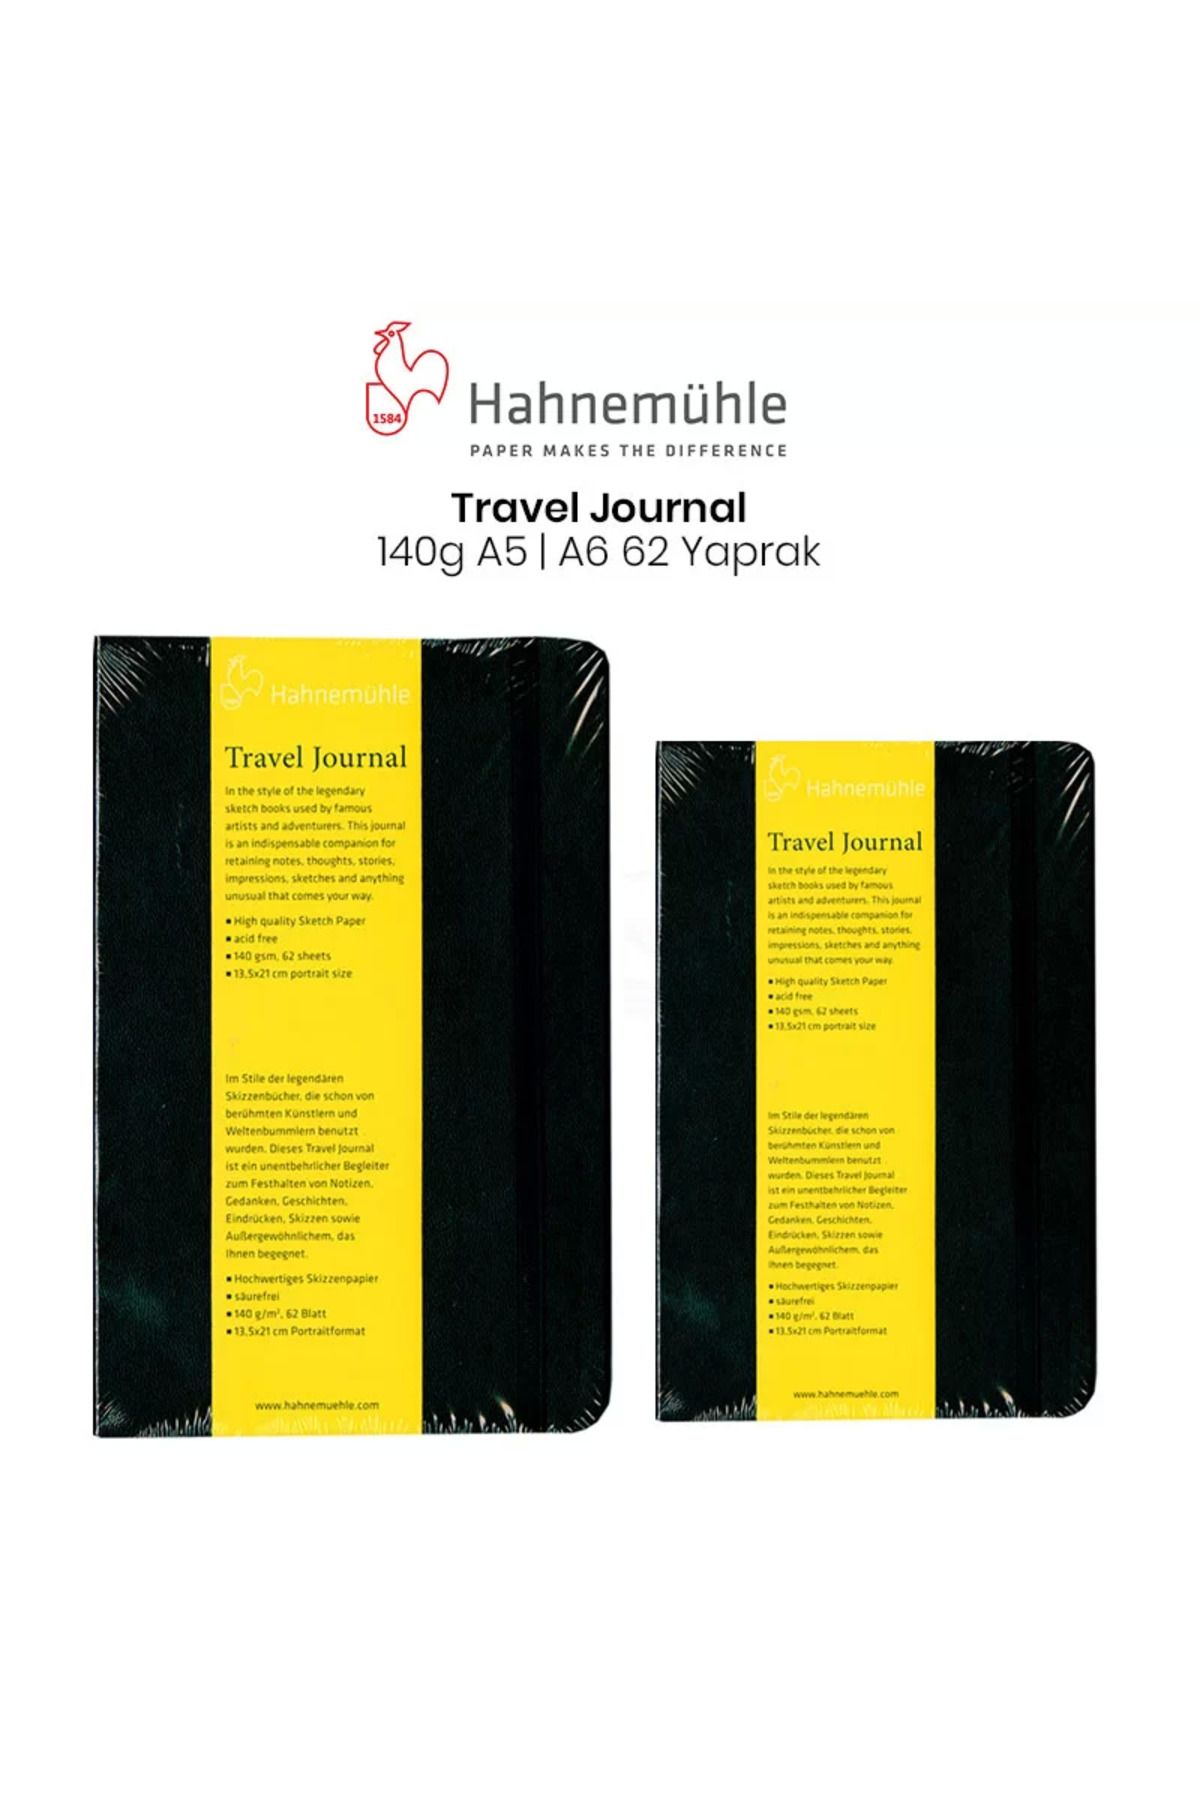 Hahnemühle Travel Journal 62 Yaprak 140 g